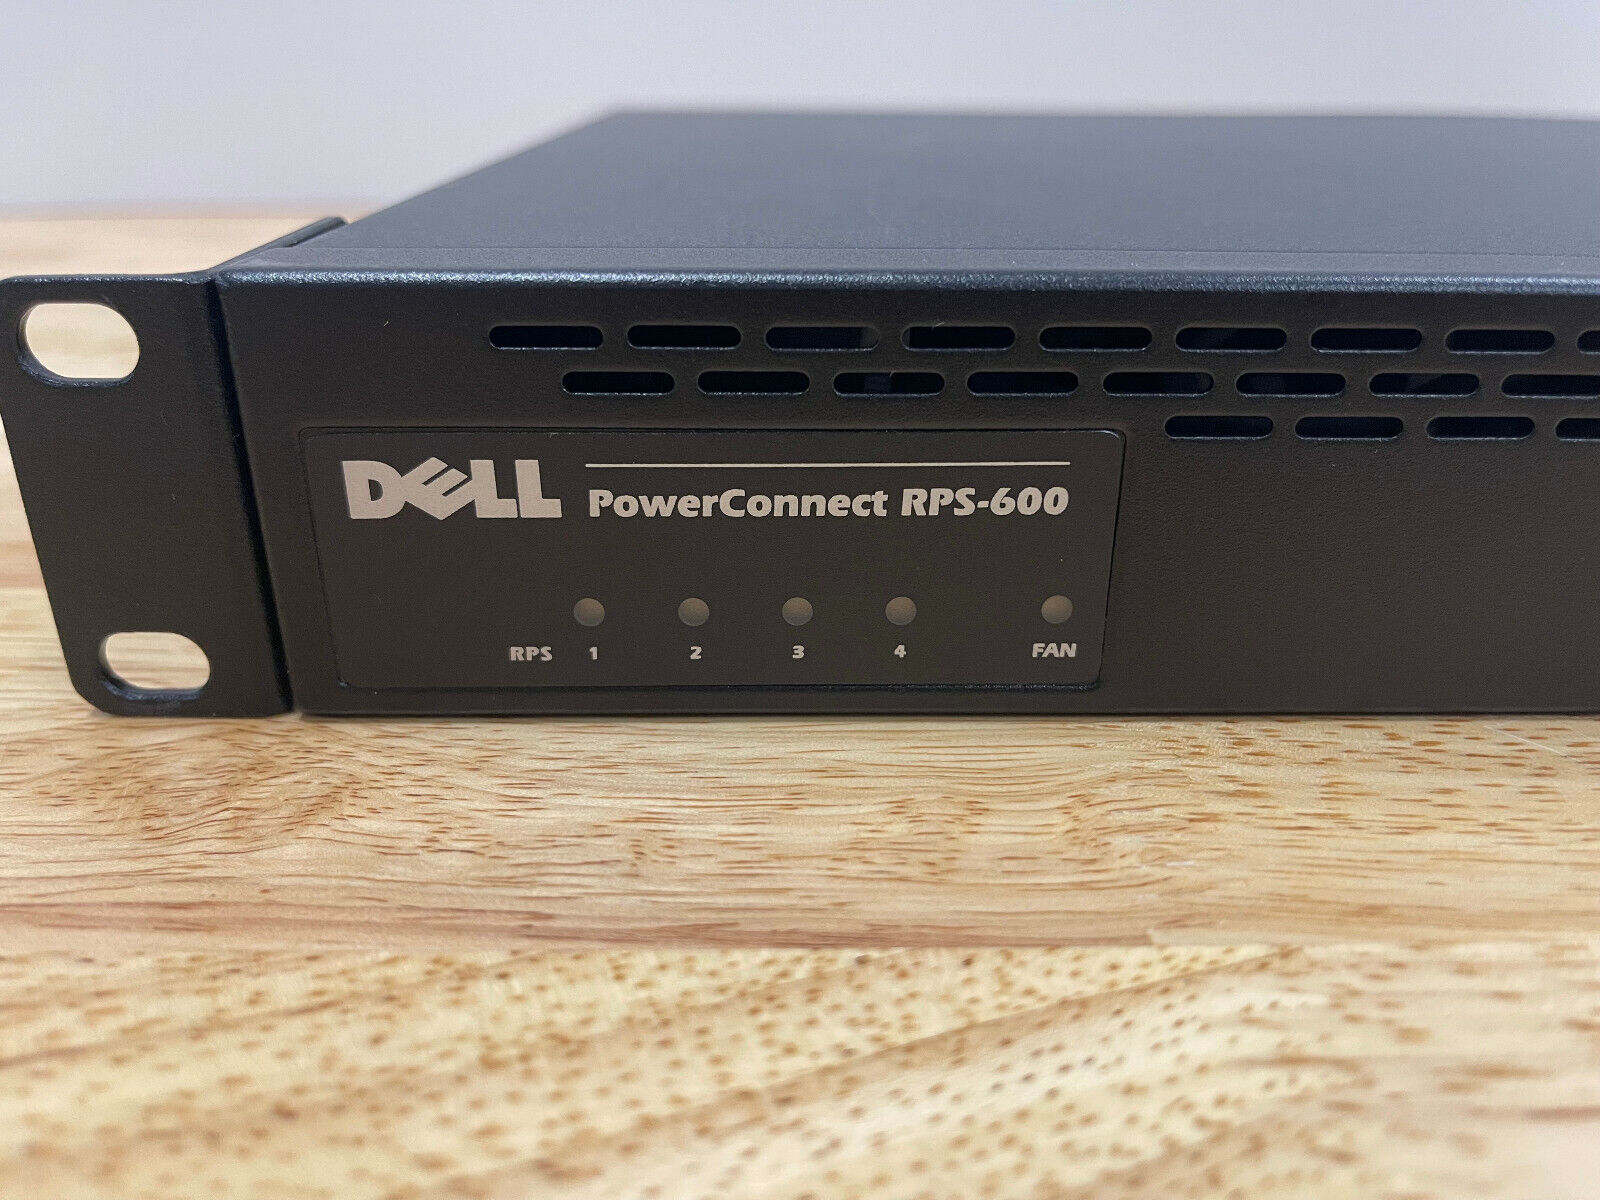 Dell PowerConnect RPS-600 Redundant AC 600W Power Supply PSU 0C336M.